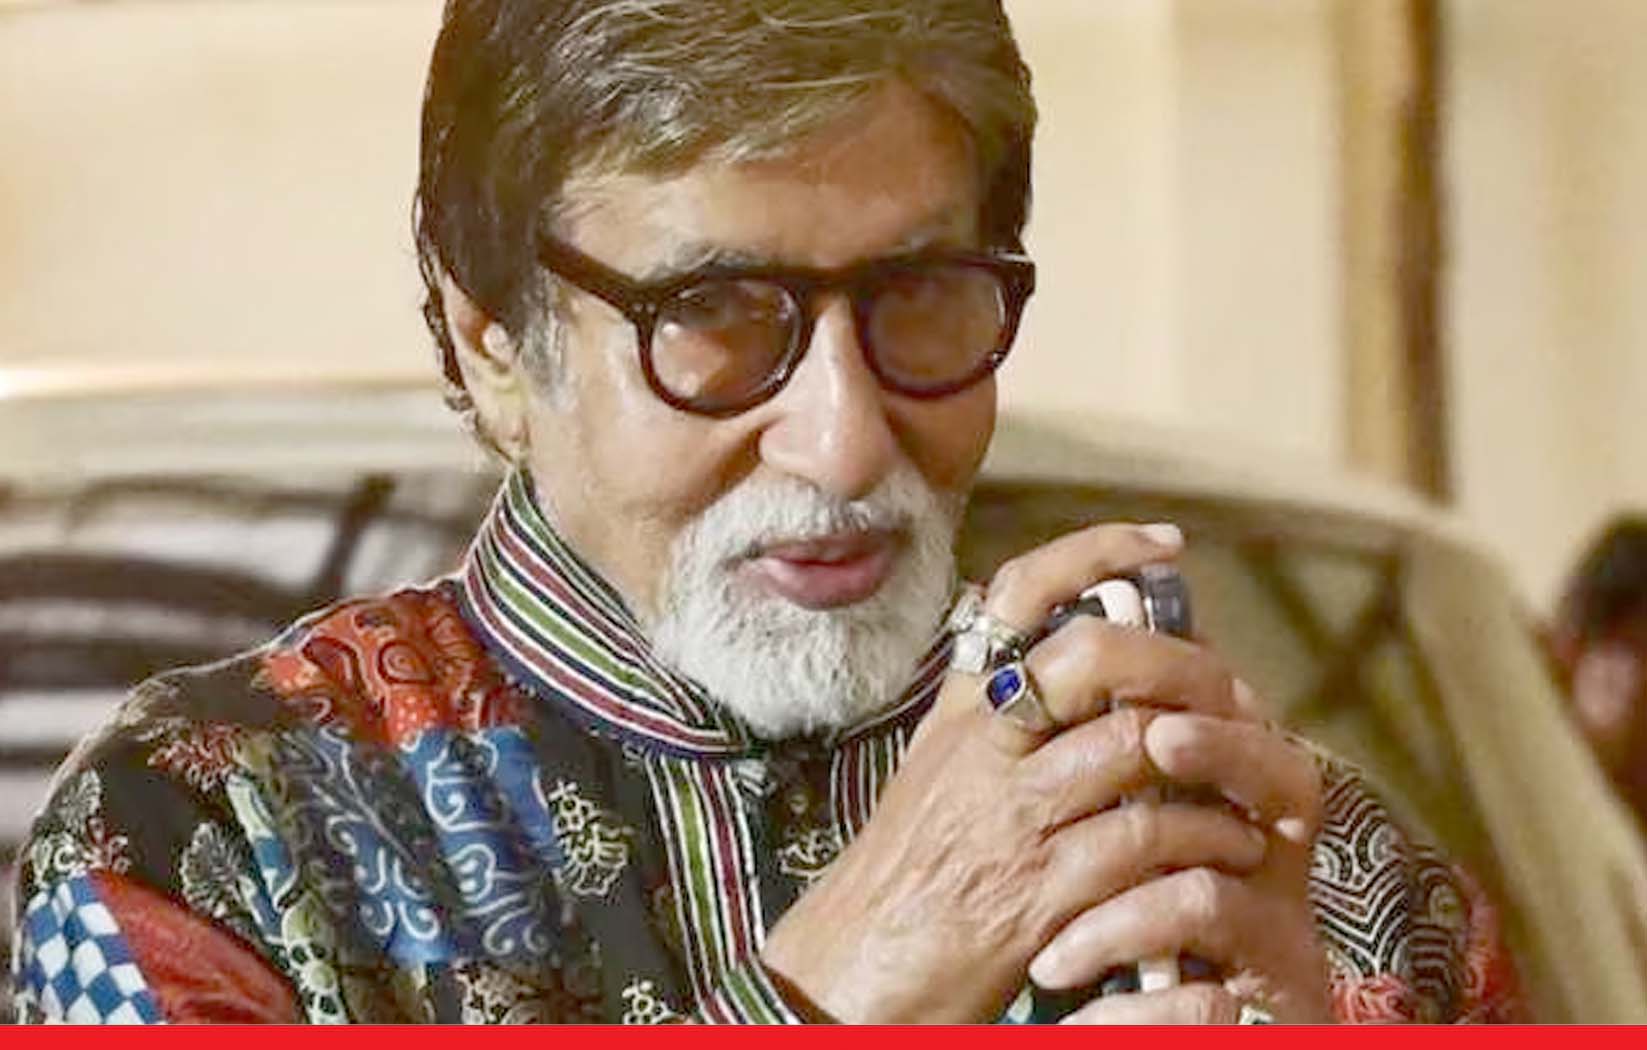 महानायक अमिताभ बच्चन शूटिंग के दौरान घायल, चोट लगने से फ्रैक्चर